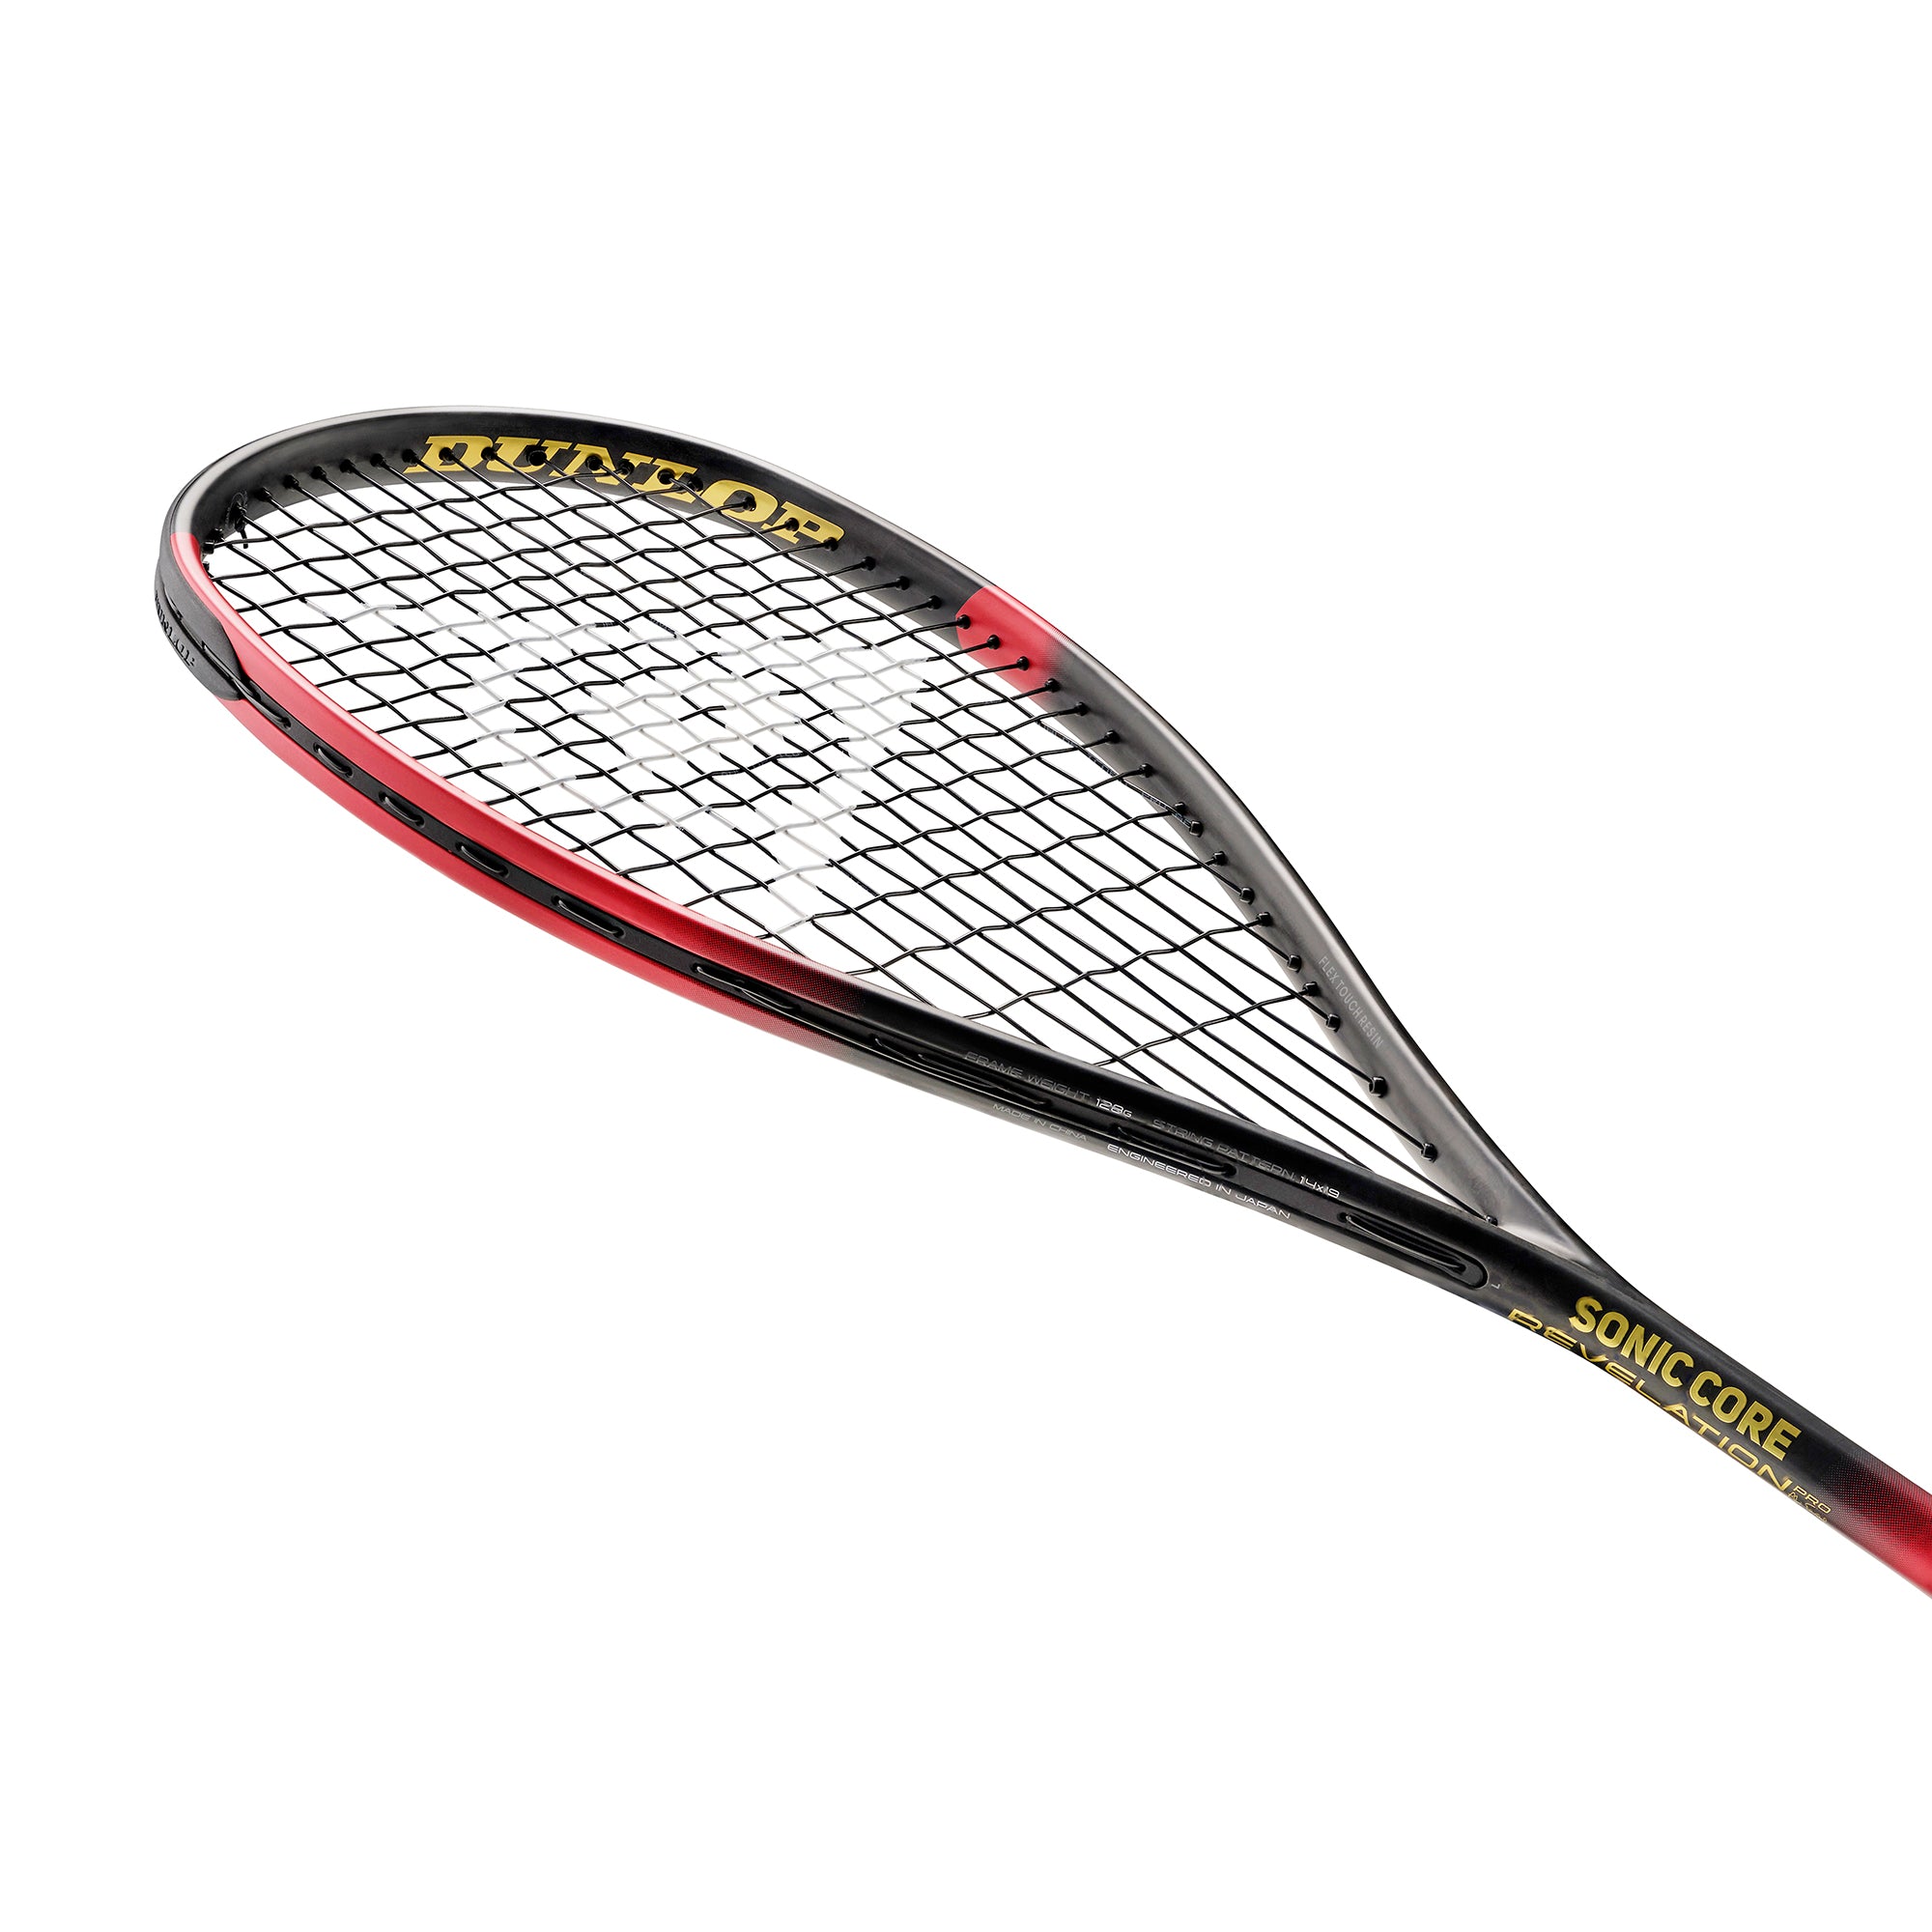 Dunlop Revelation Pro Squash Racket